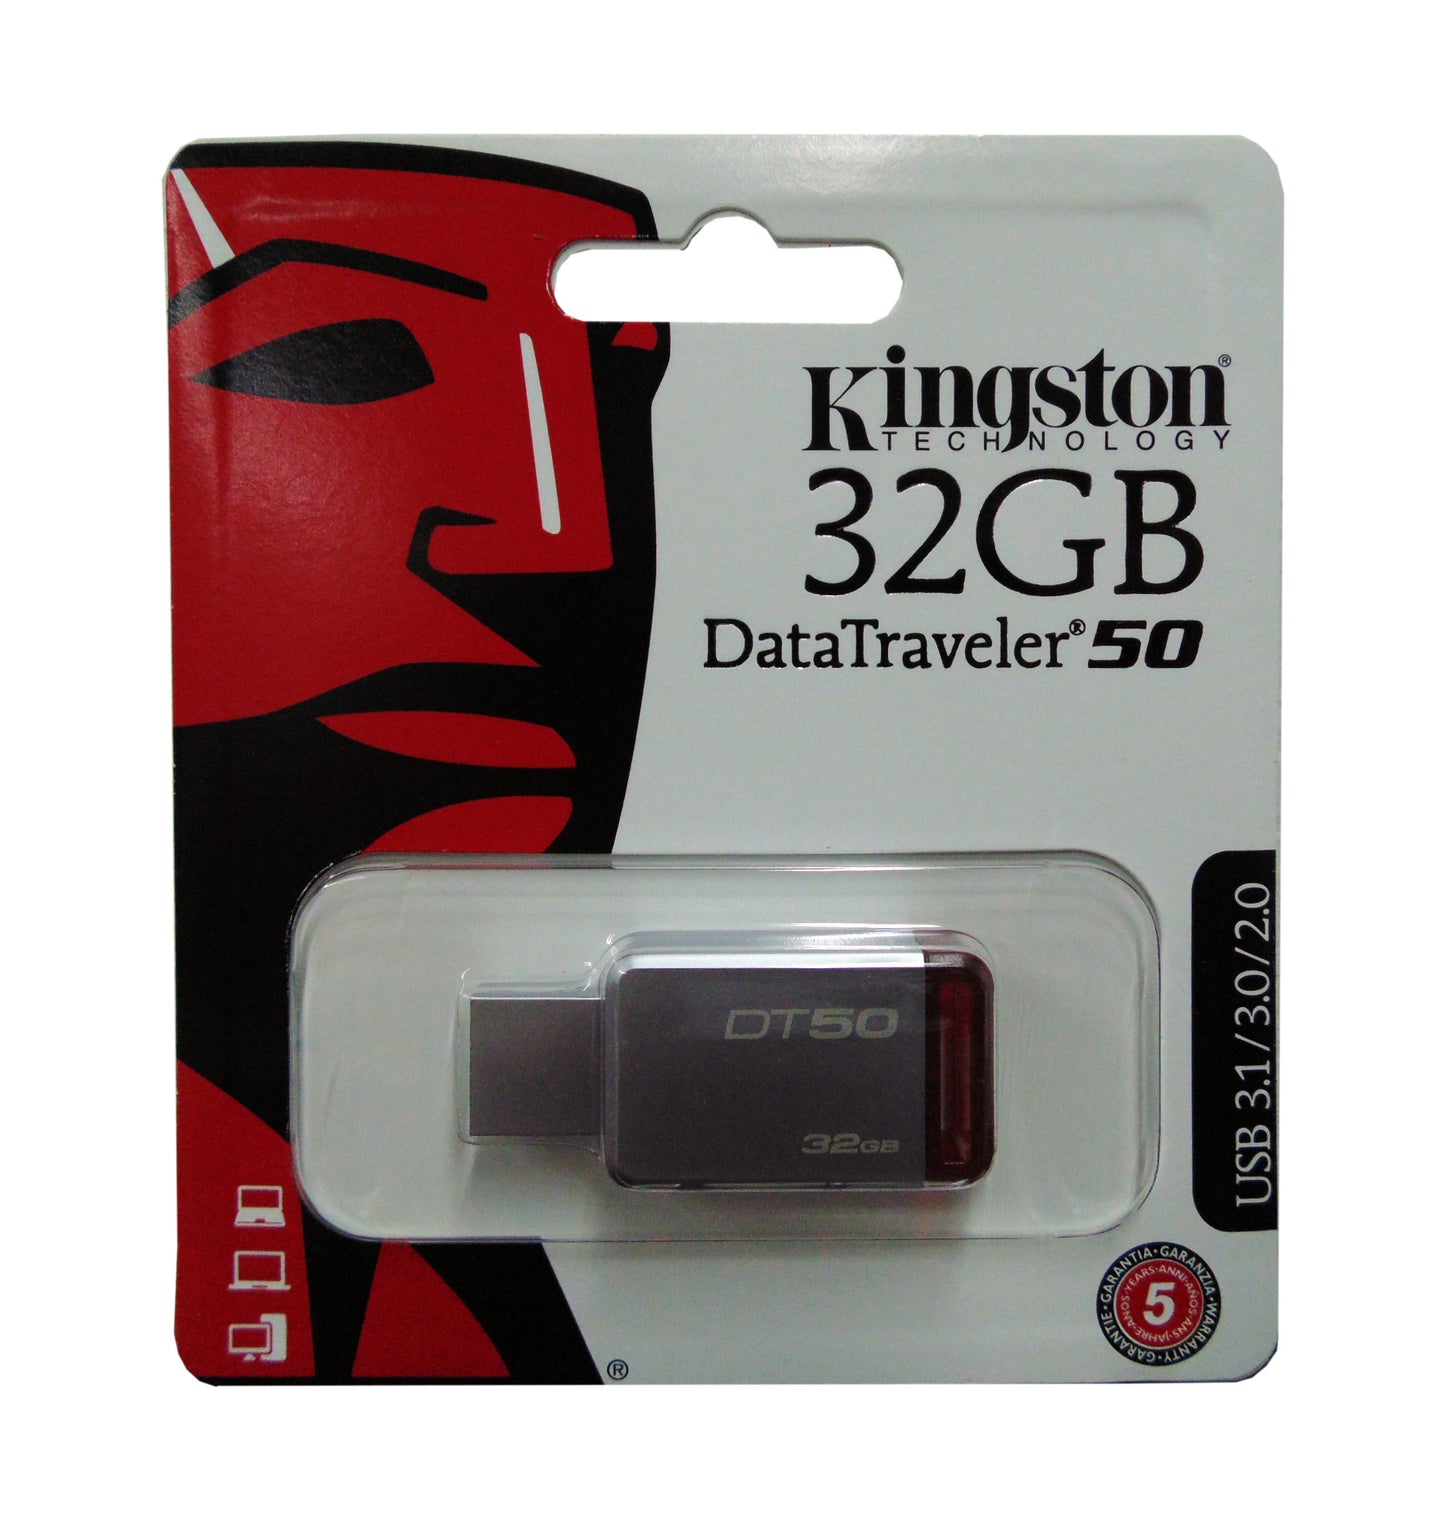 Pendrive Kingston Data Traveler 50 32GB USB 3.0